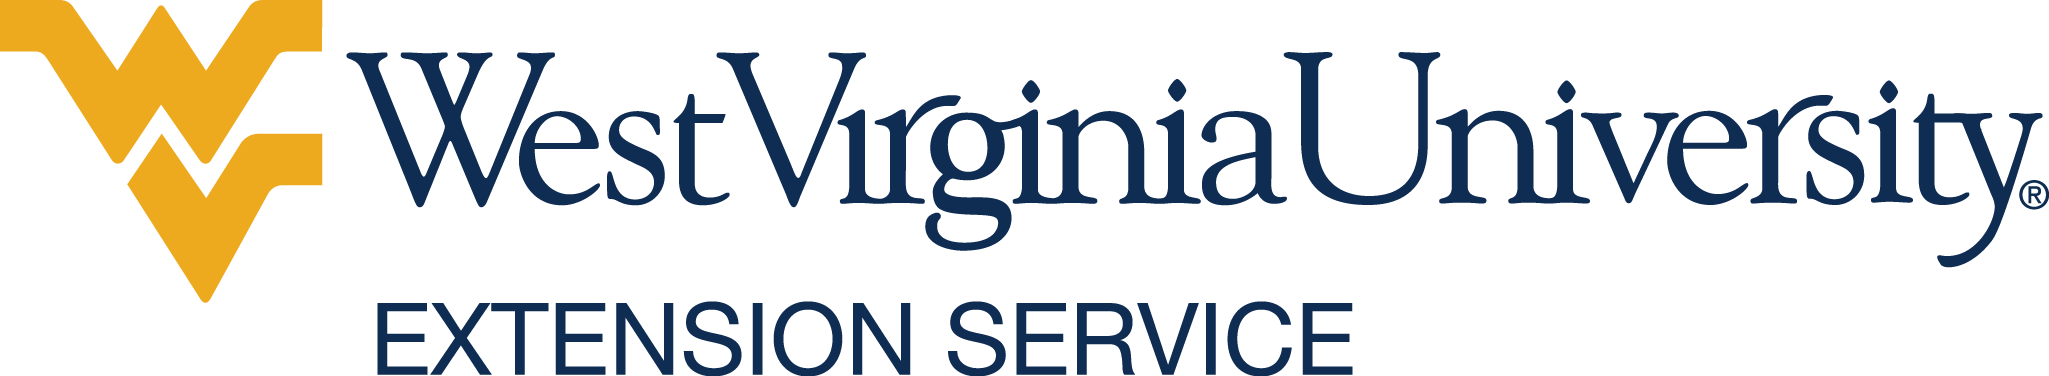 WVU Extension Service logo